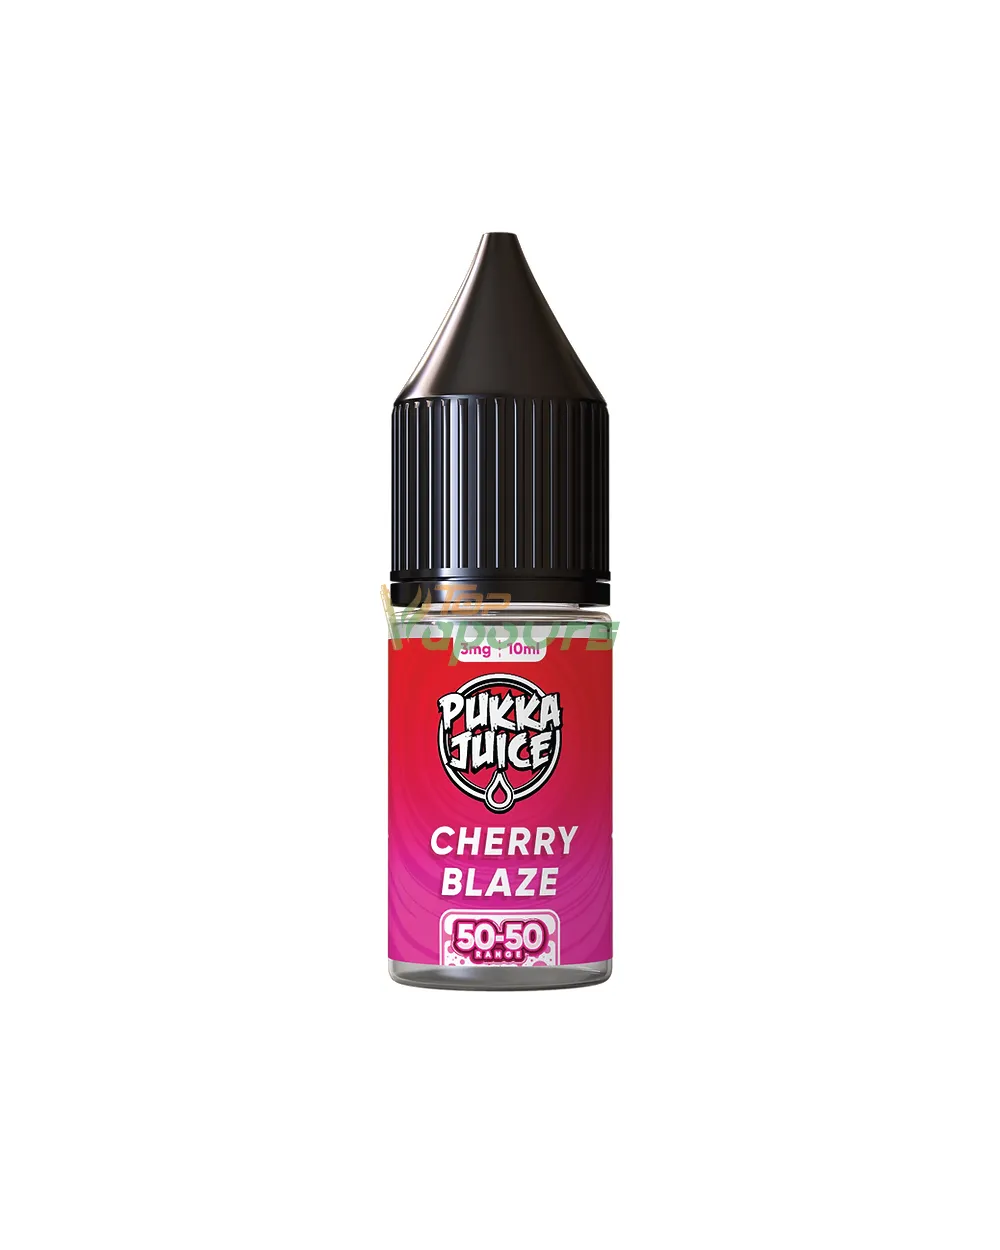 Cherry Blaze 50/50 10ML Pukka Juice